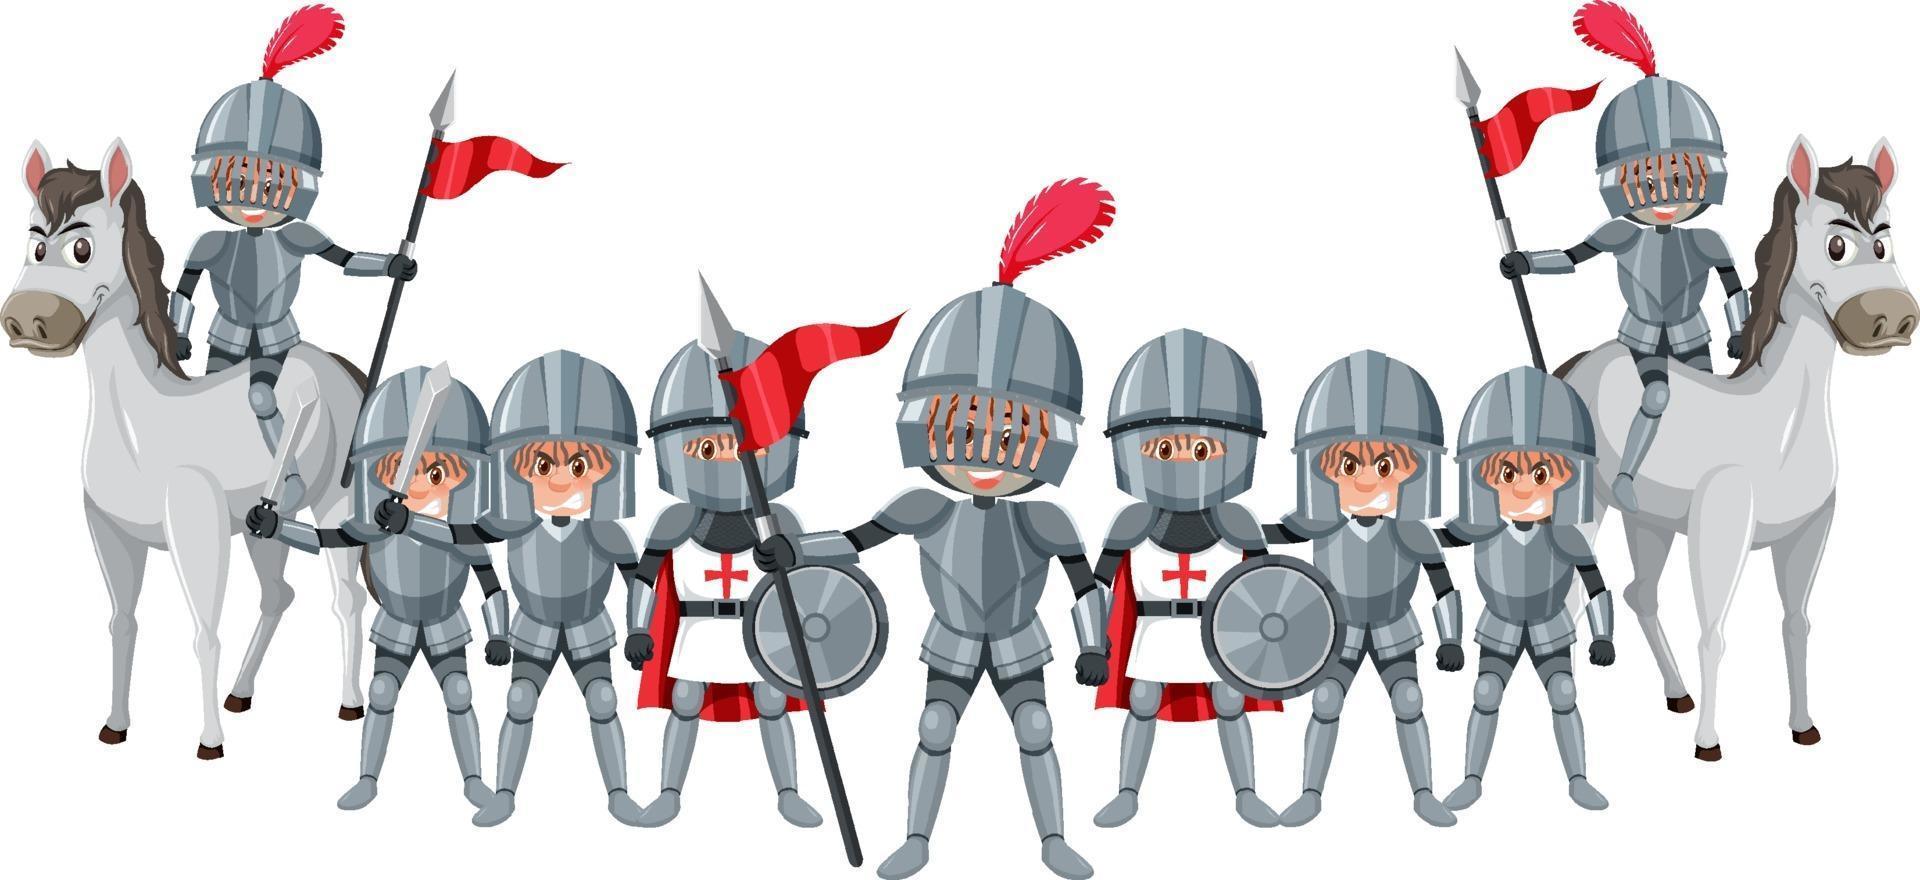 en grupp medeltida riddare på vit bakgrund vektor